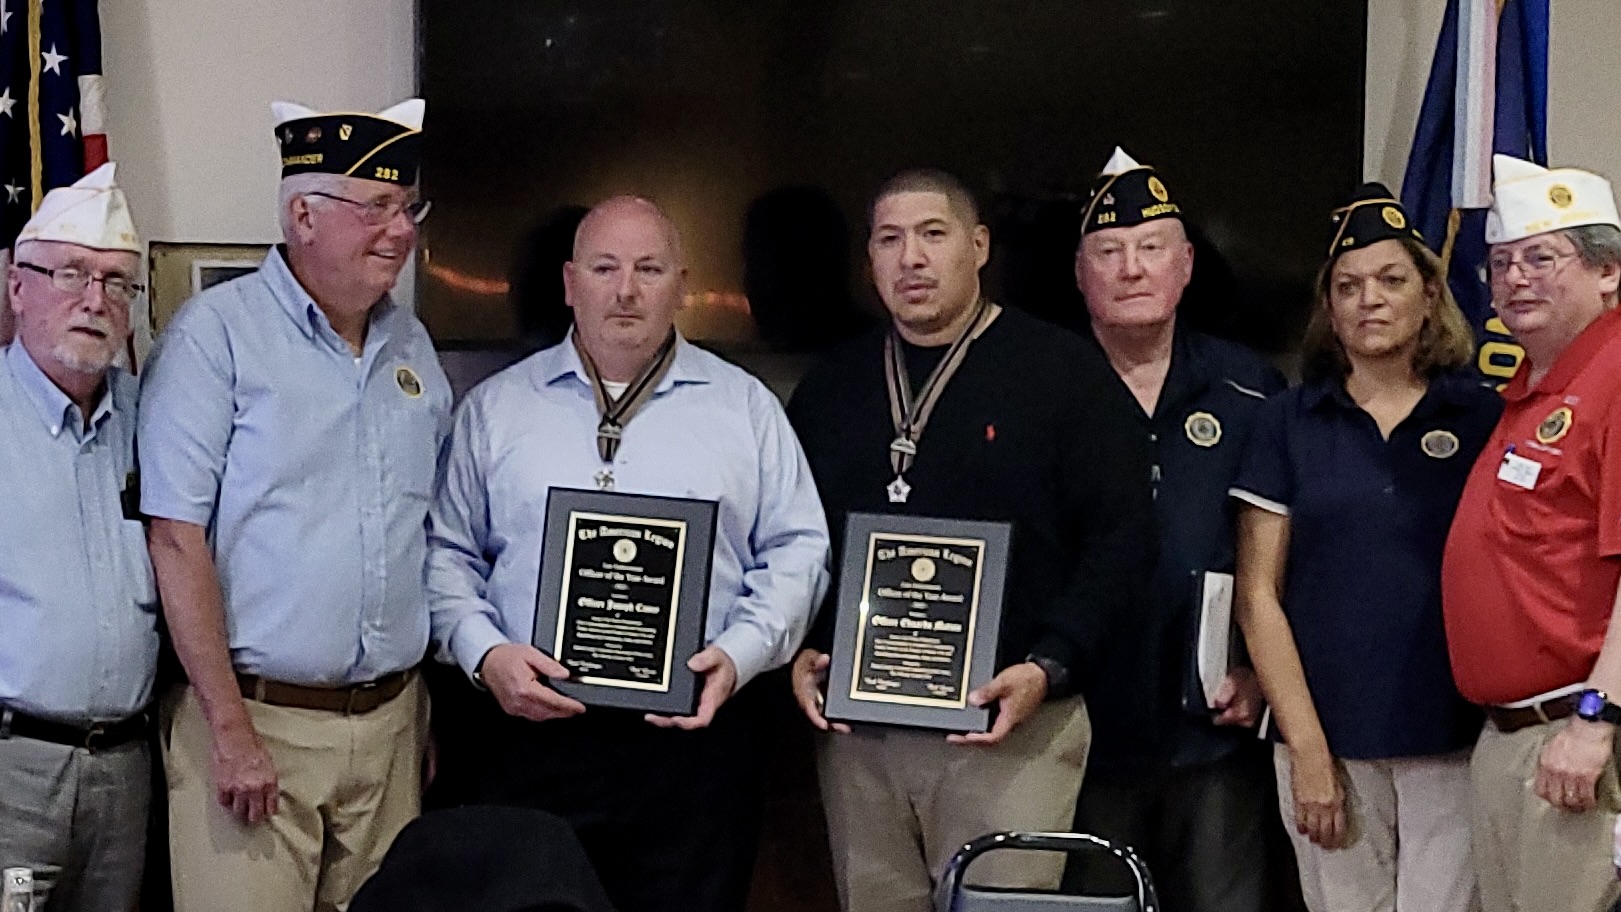 Jersey City American Legion award